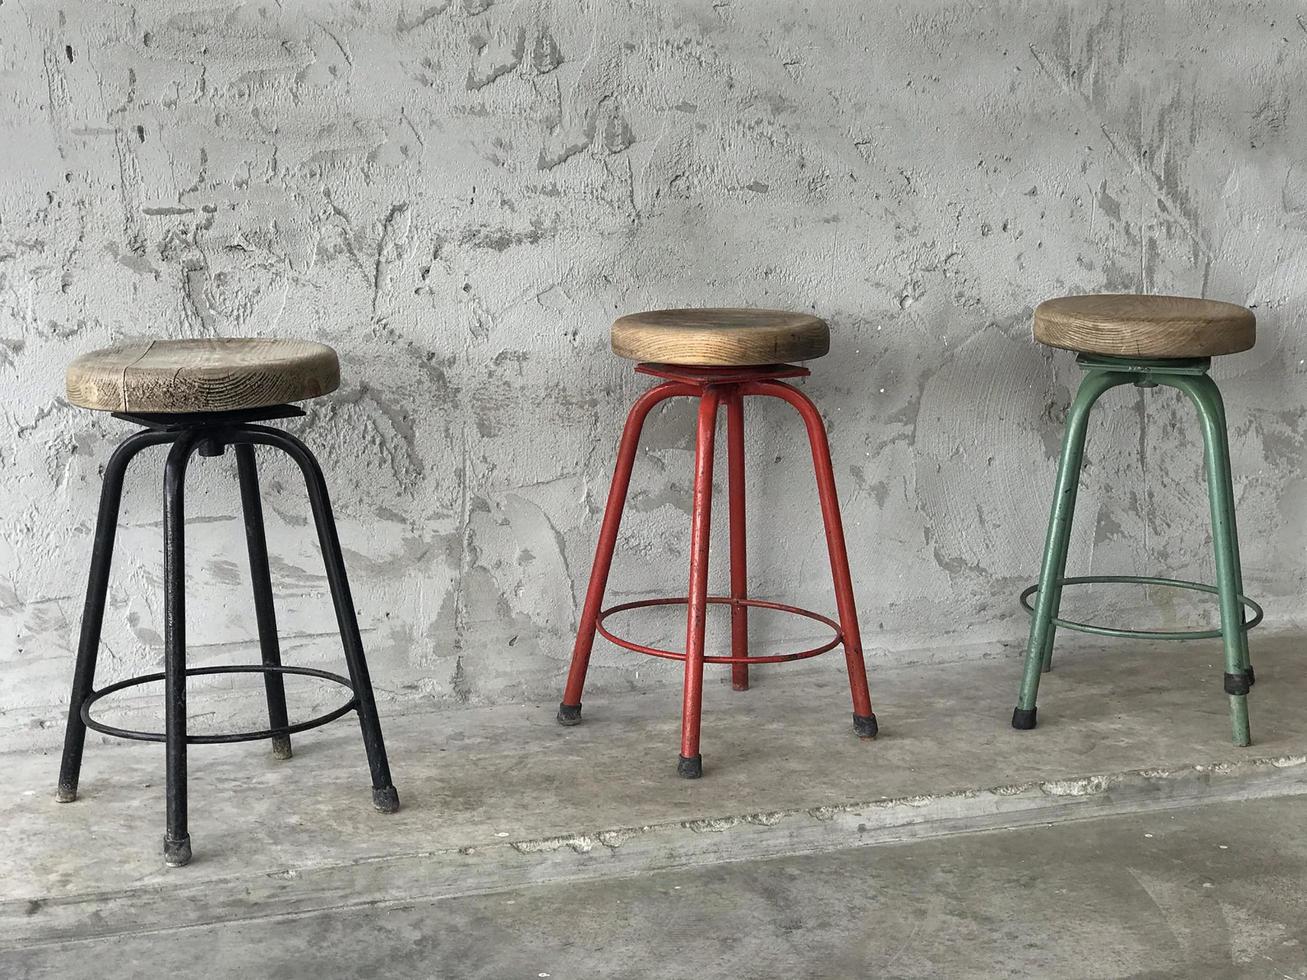 Three colorful stools photo